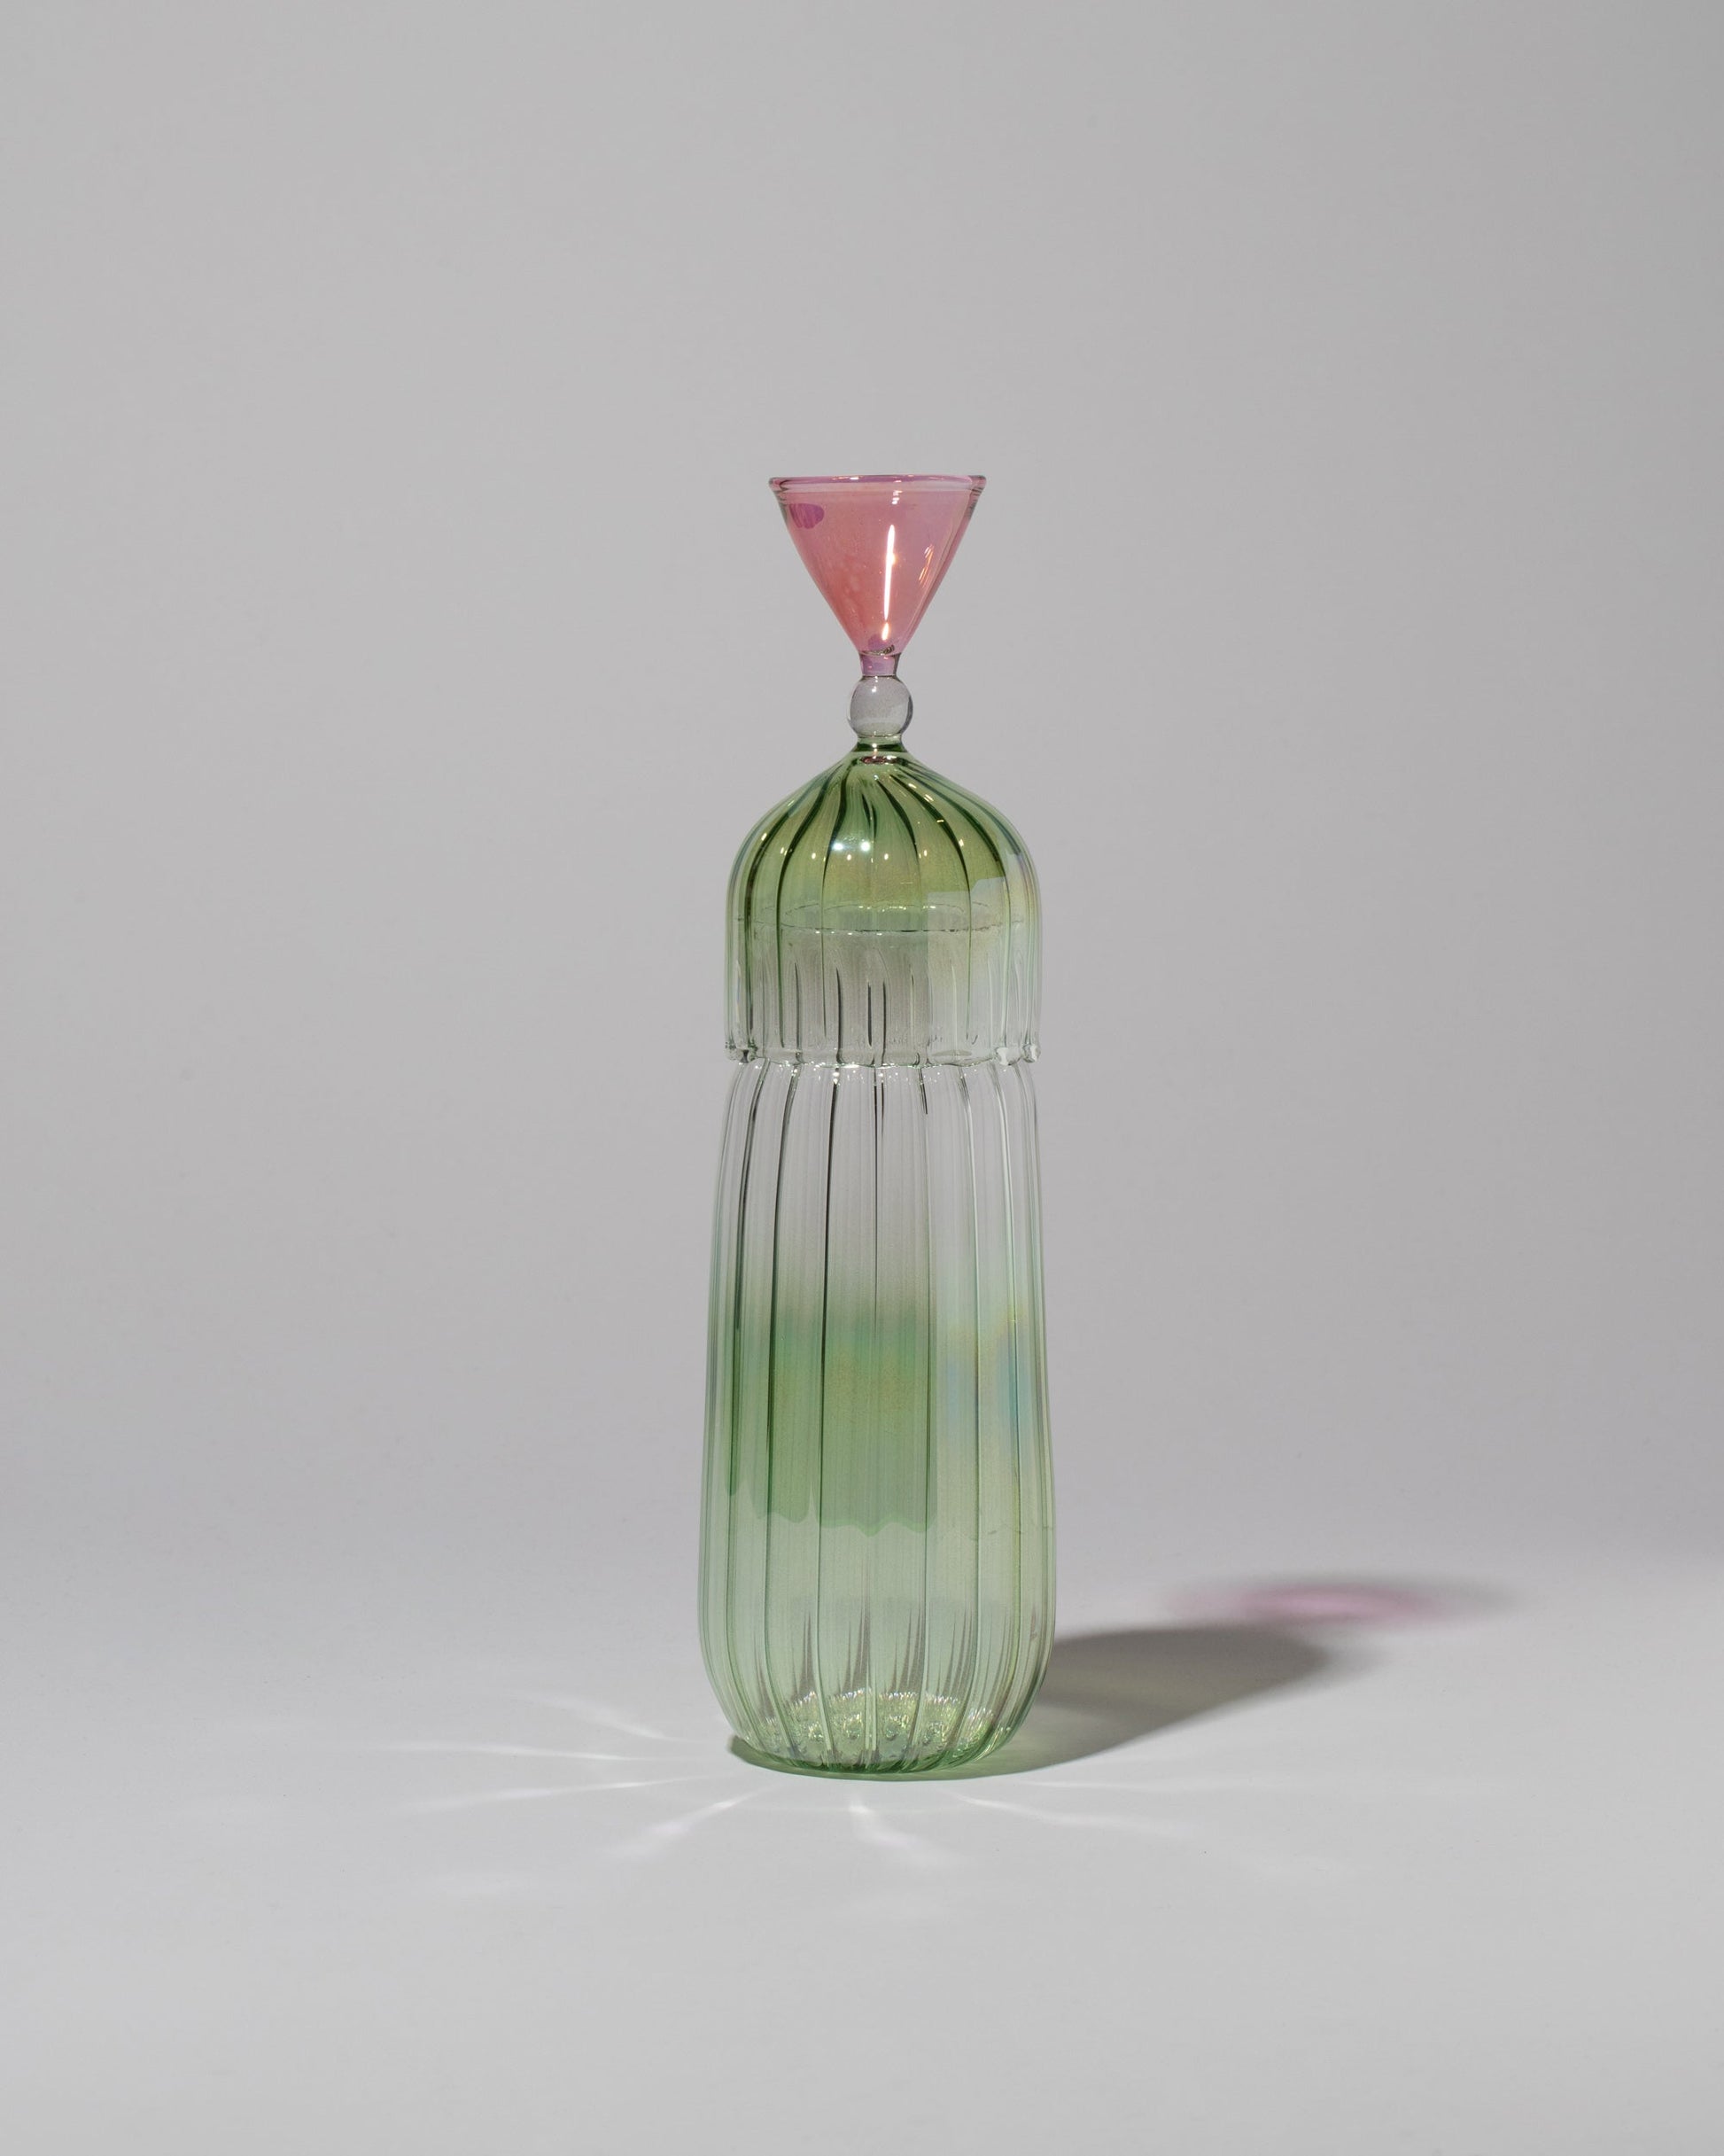 Serena Confalonieri Calypso Bottle & Glass in Green on light color background.